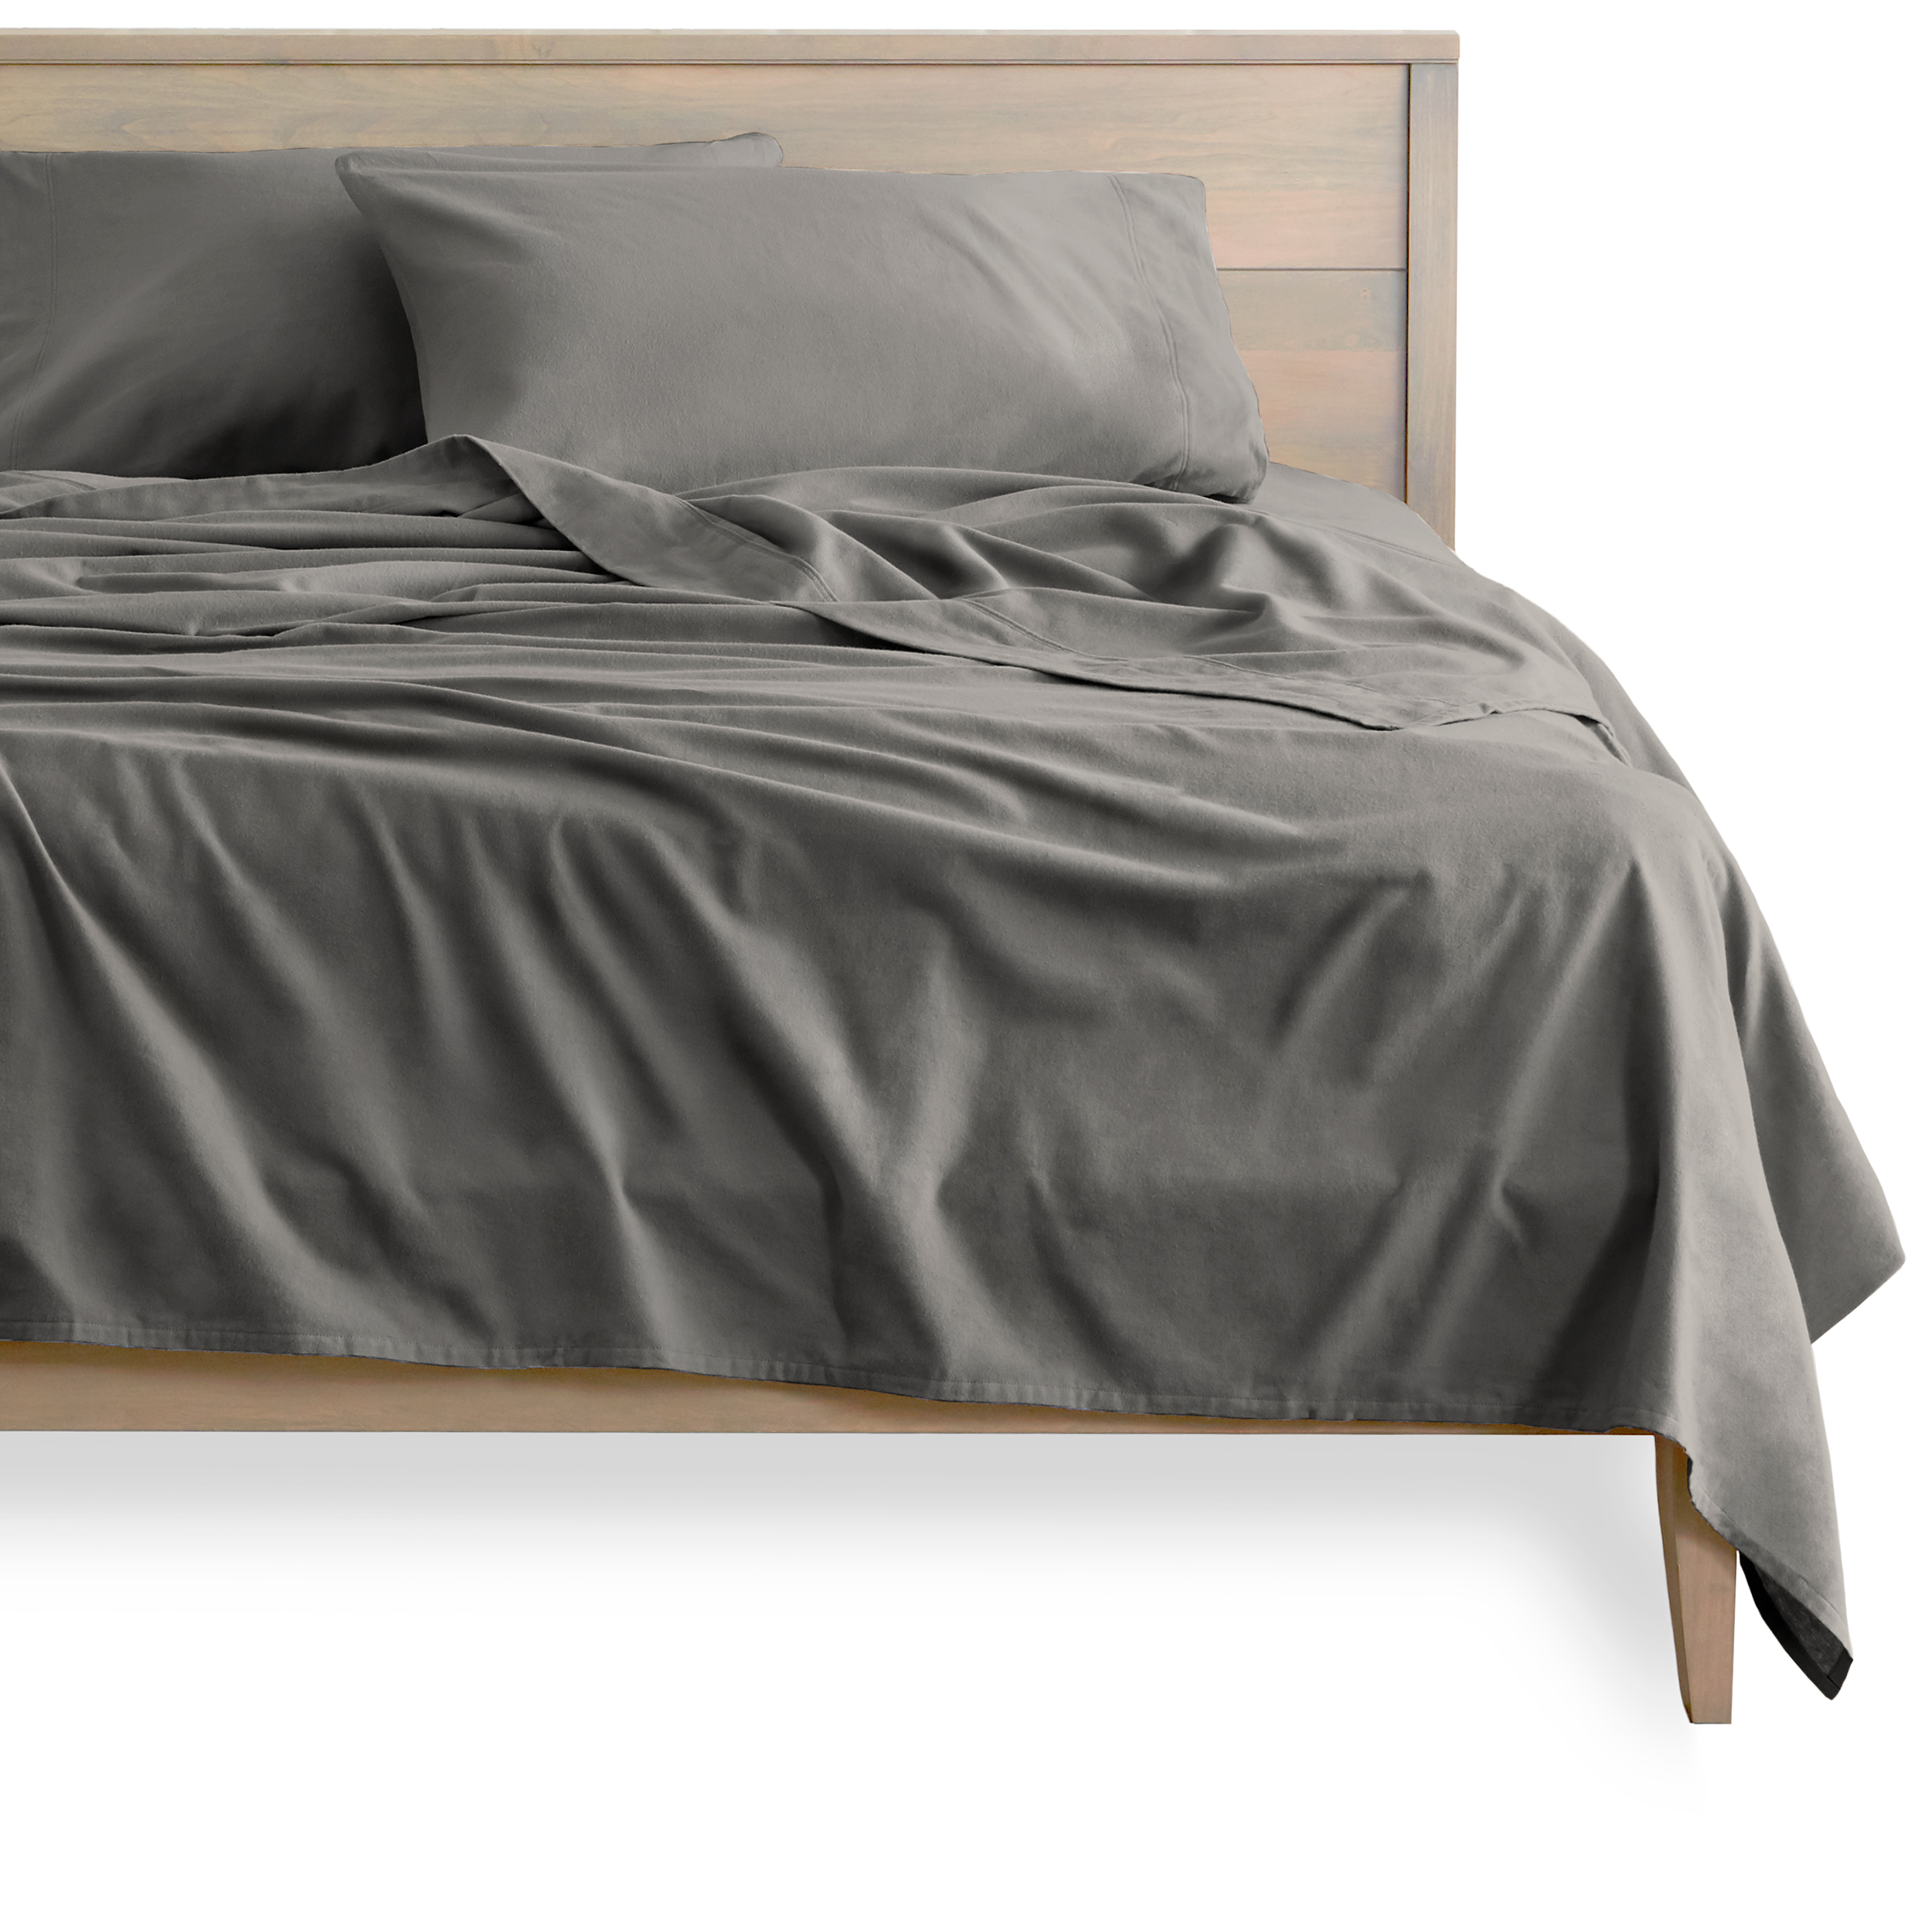 Bare Home 100% Cotton Flannel Sheet Set, Heavyweight, Deep Pocket (Queen, Gray) - image 1 of 5